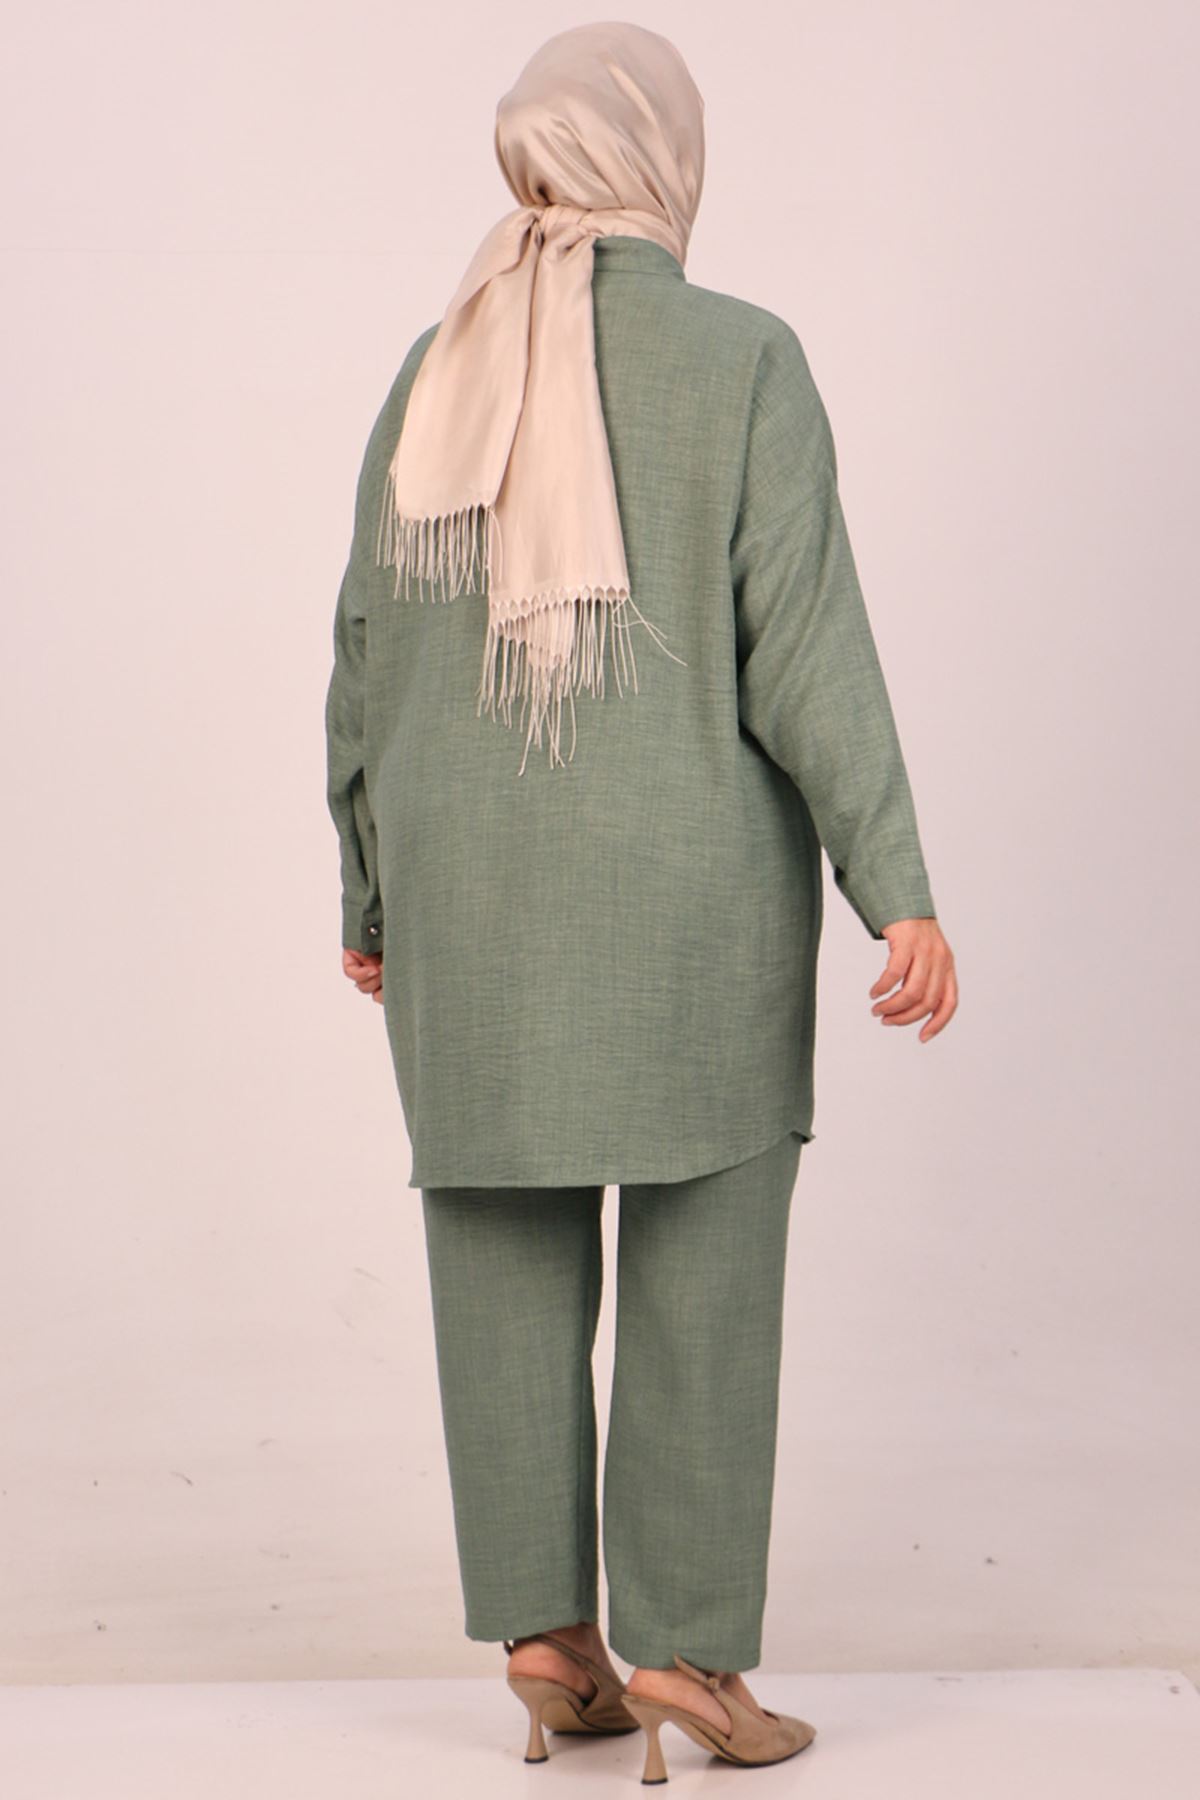 turkish modest clothing online in chicago